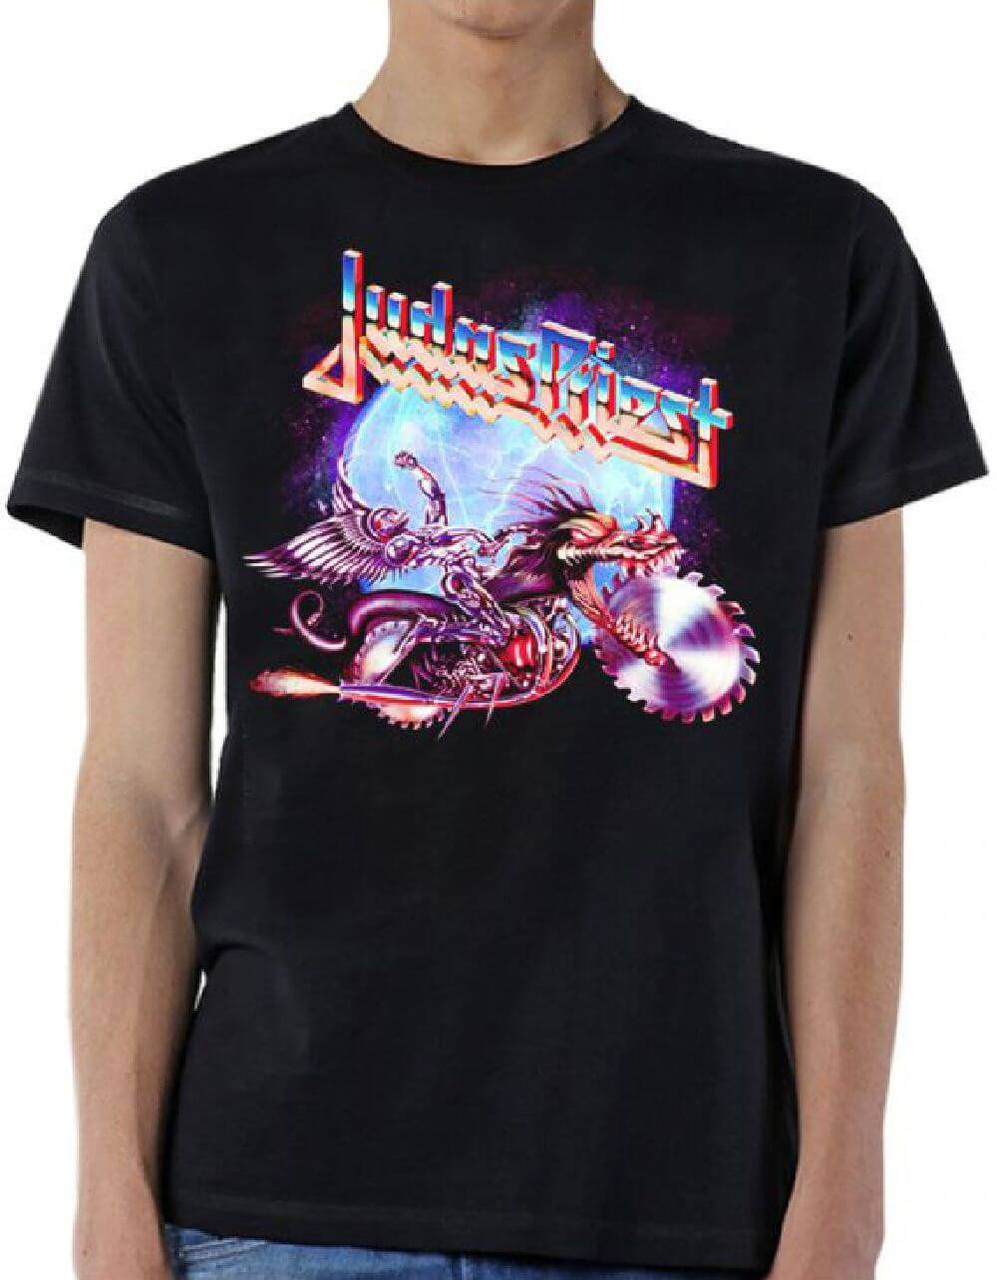 Judas Priest Painkiller Album Cover Artwork Men’s Black T-shirt